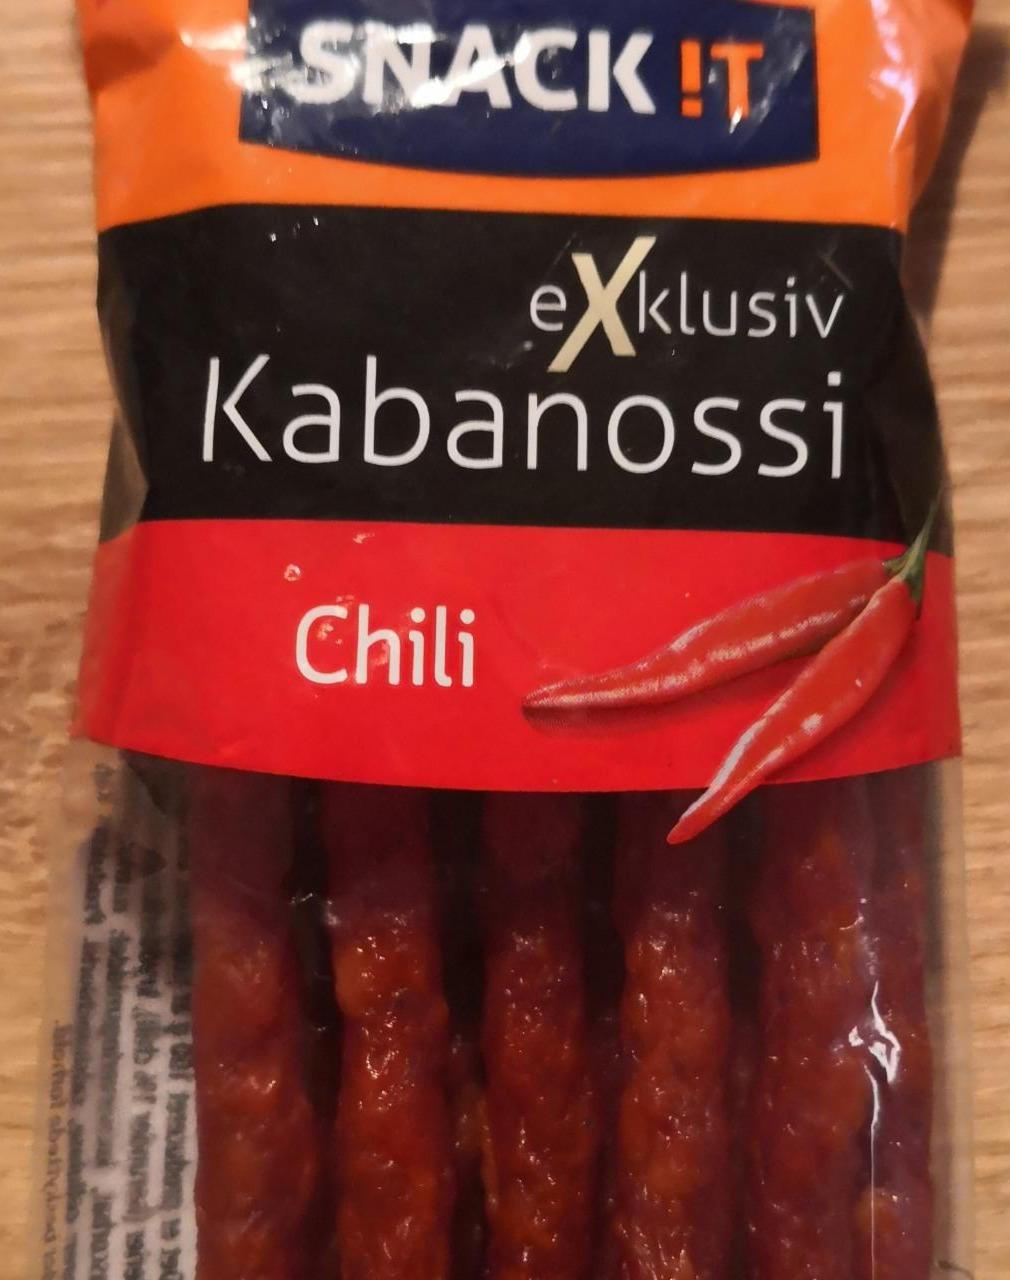 Zdjęcia - Kabanossi Exclusiv Chili Snack!t